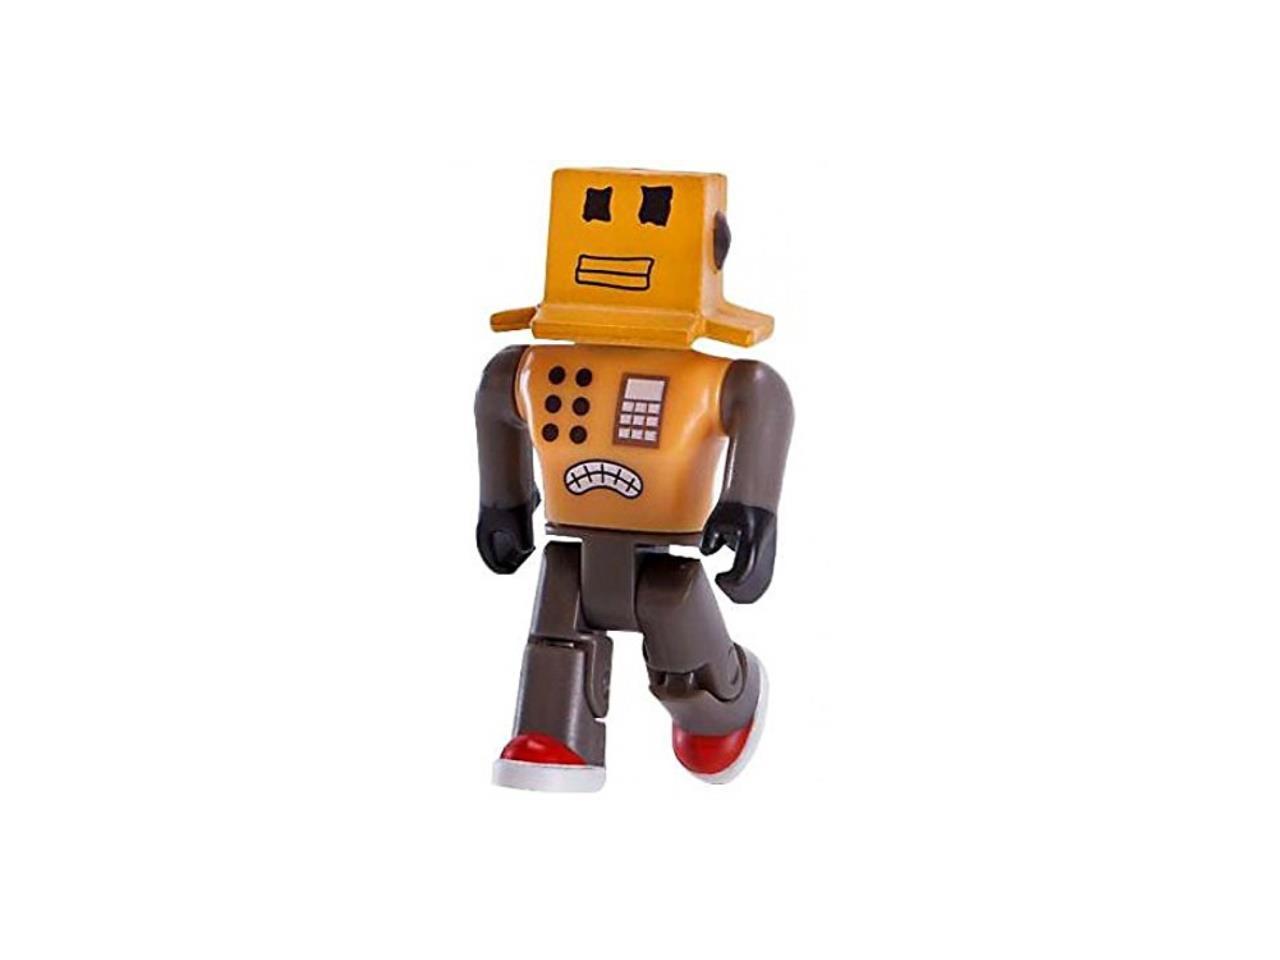 Roblox Series 1 Mr Robot Action Figure Mystery Box Virtual Item Code 2 5 Newegg Com - roblox toys series 1 action figures circuit breaker with virtual game code